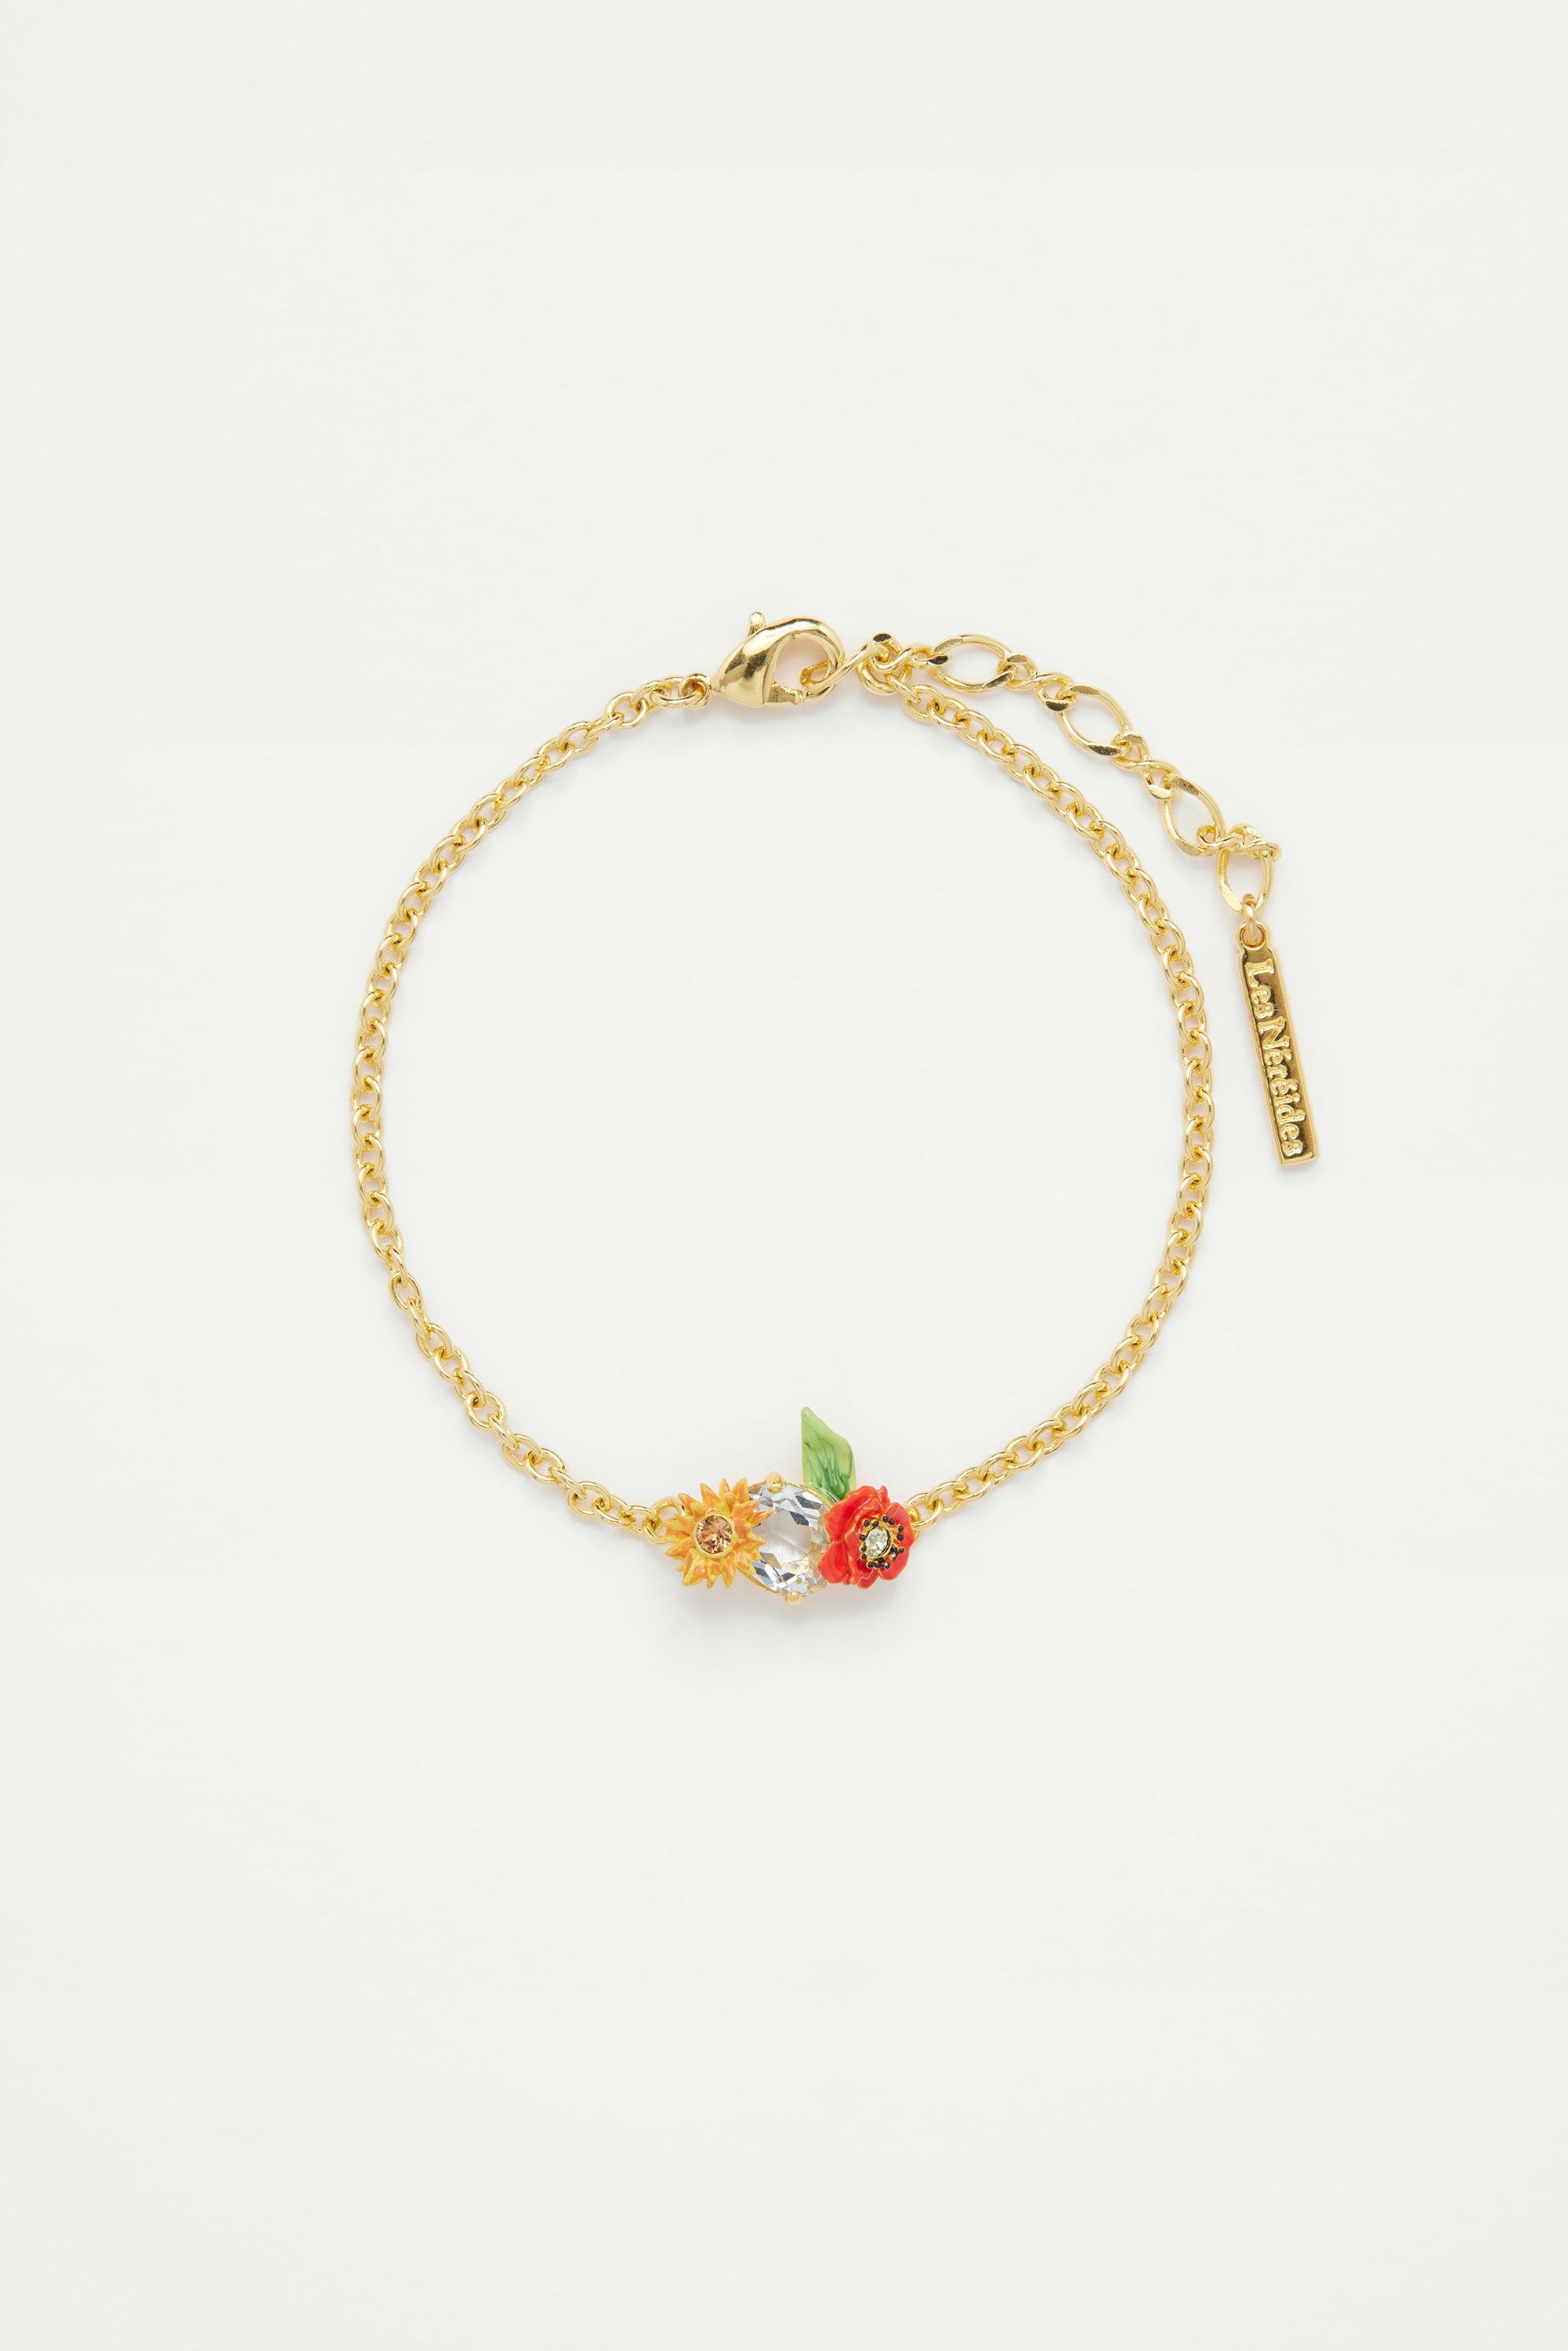 Fine poppy, sunflower and blue cut glass stone bracelet